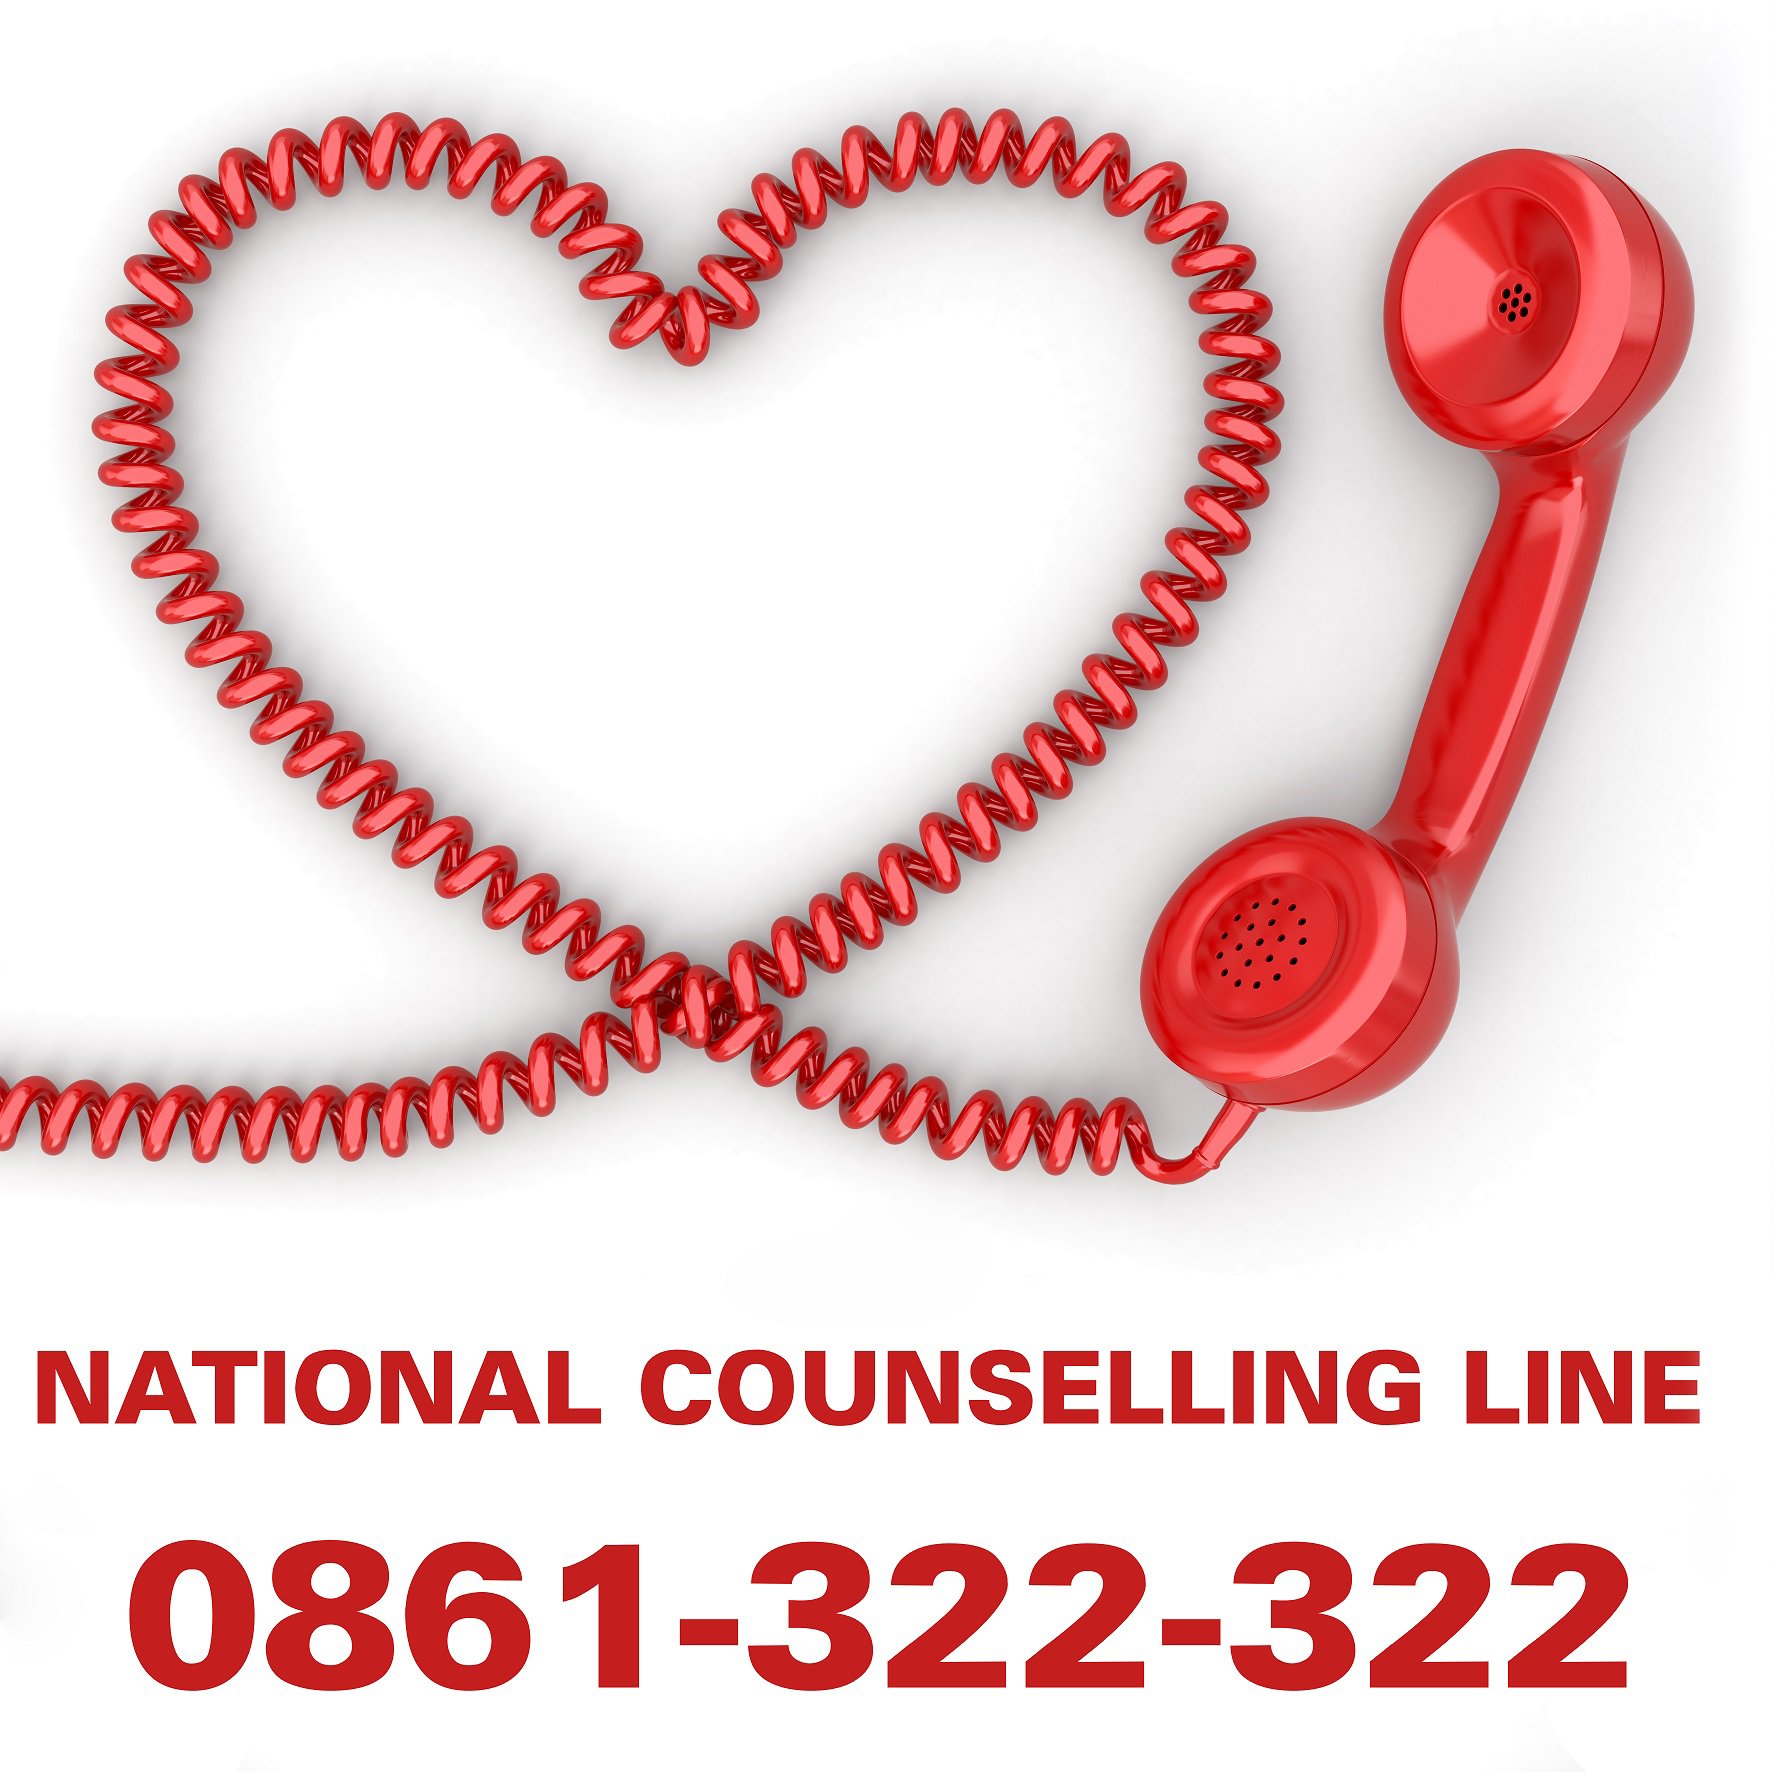 Lifeline national counselling telephone service.